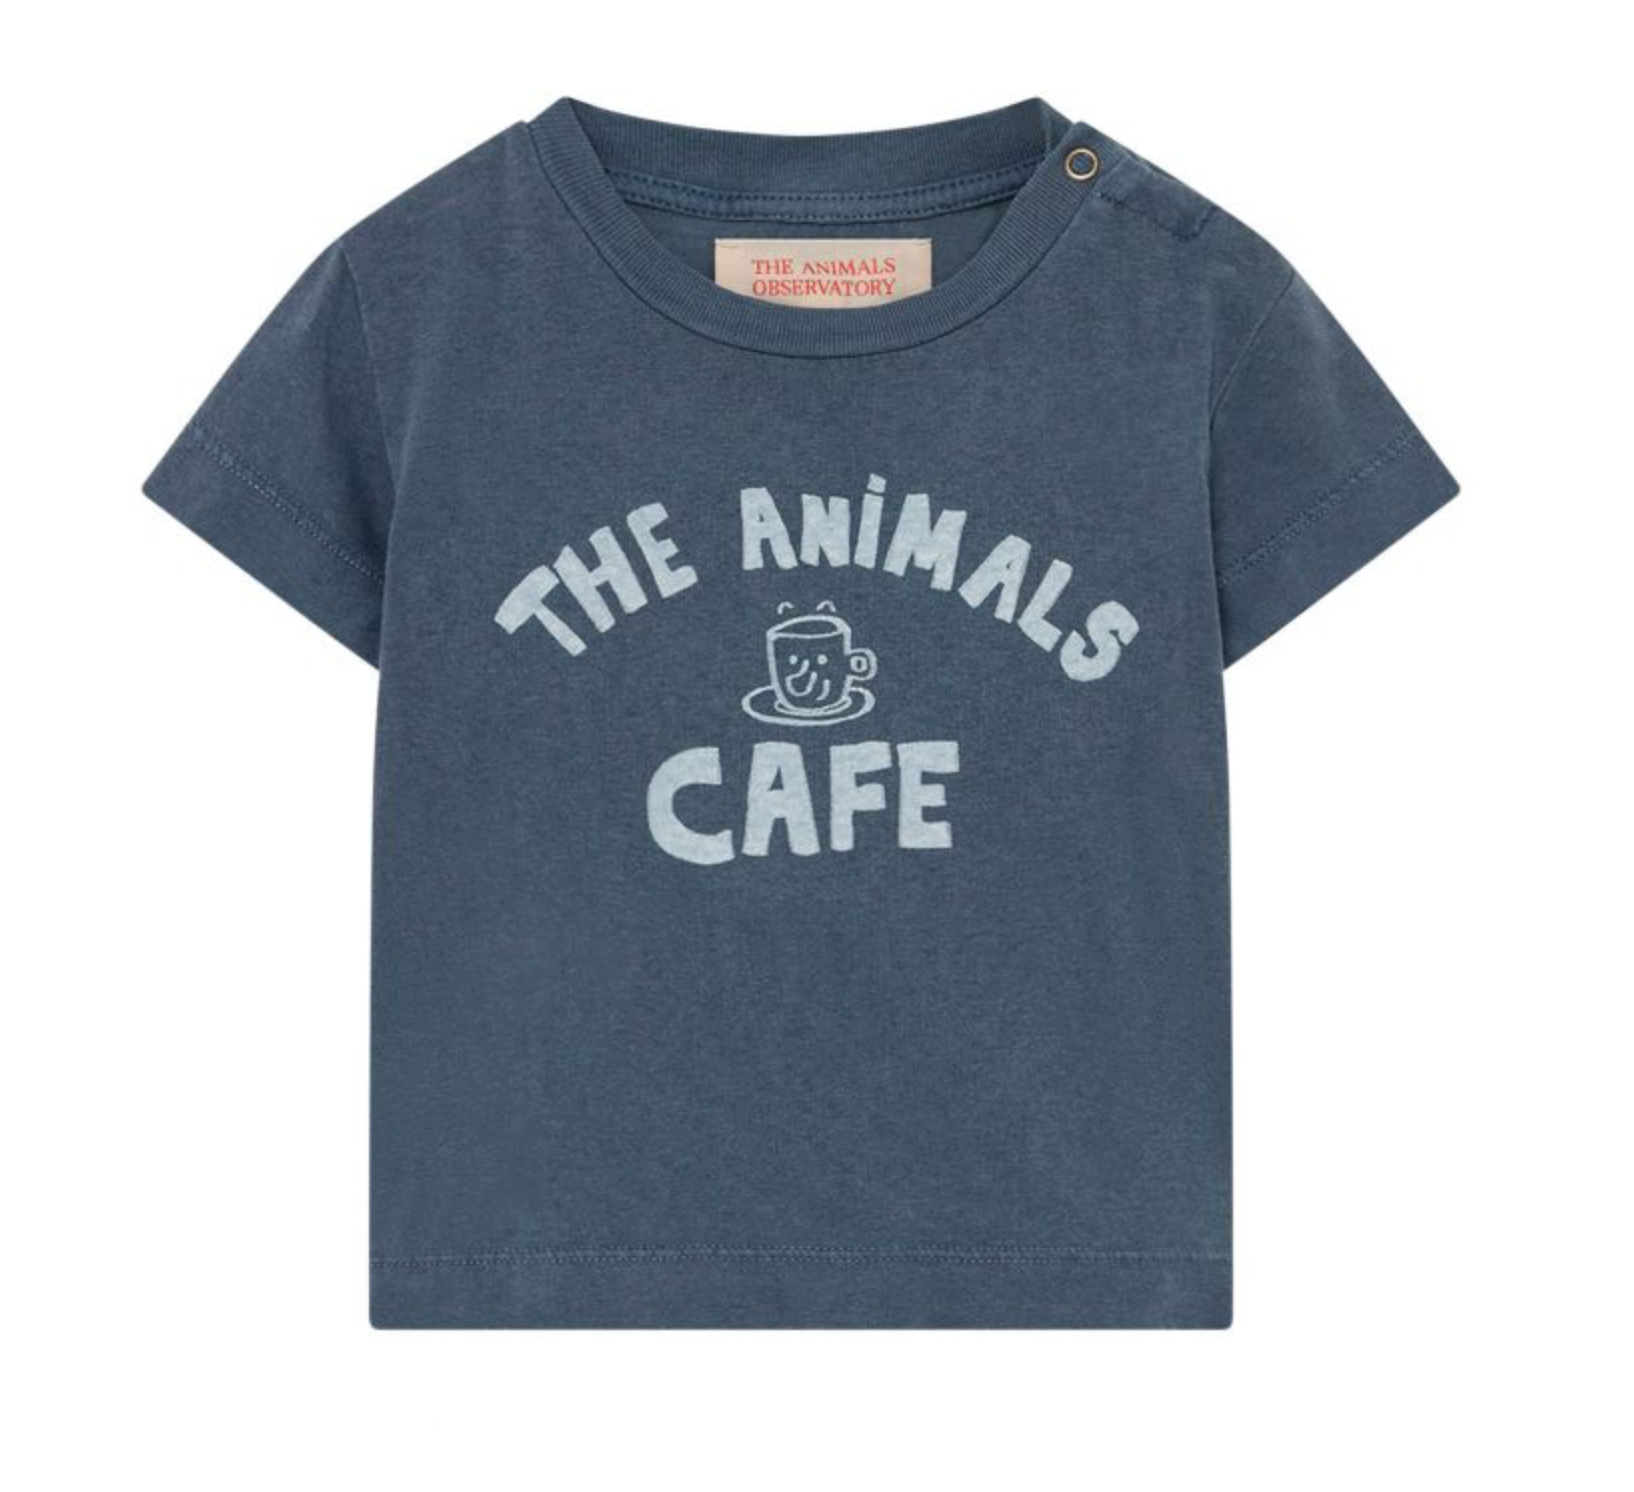 THE ANIMALS OBSERVATORY - T-shirt bleu "the animals cafe" - 8 ans